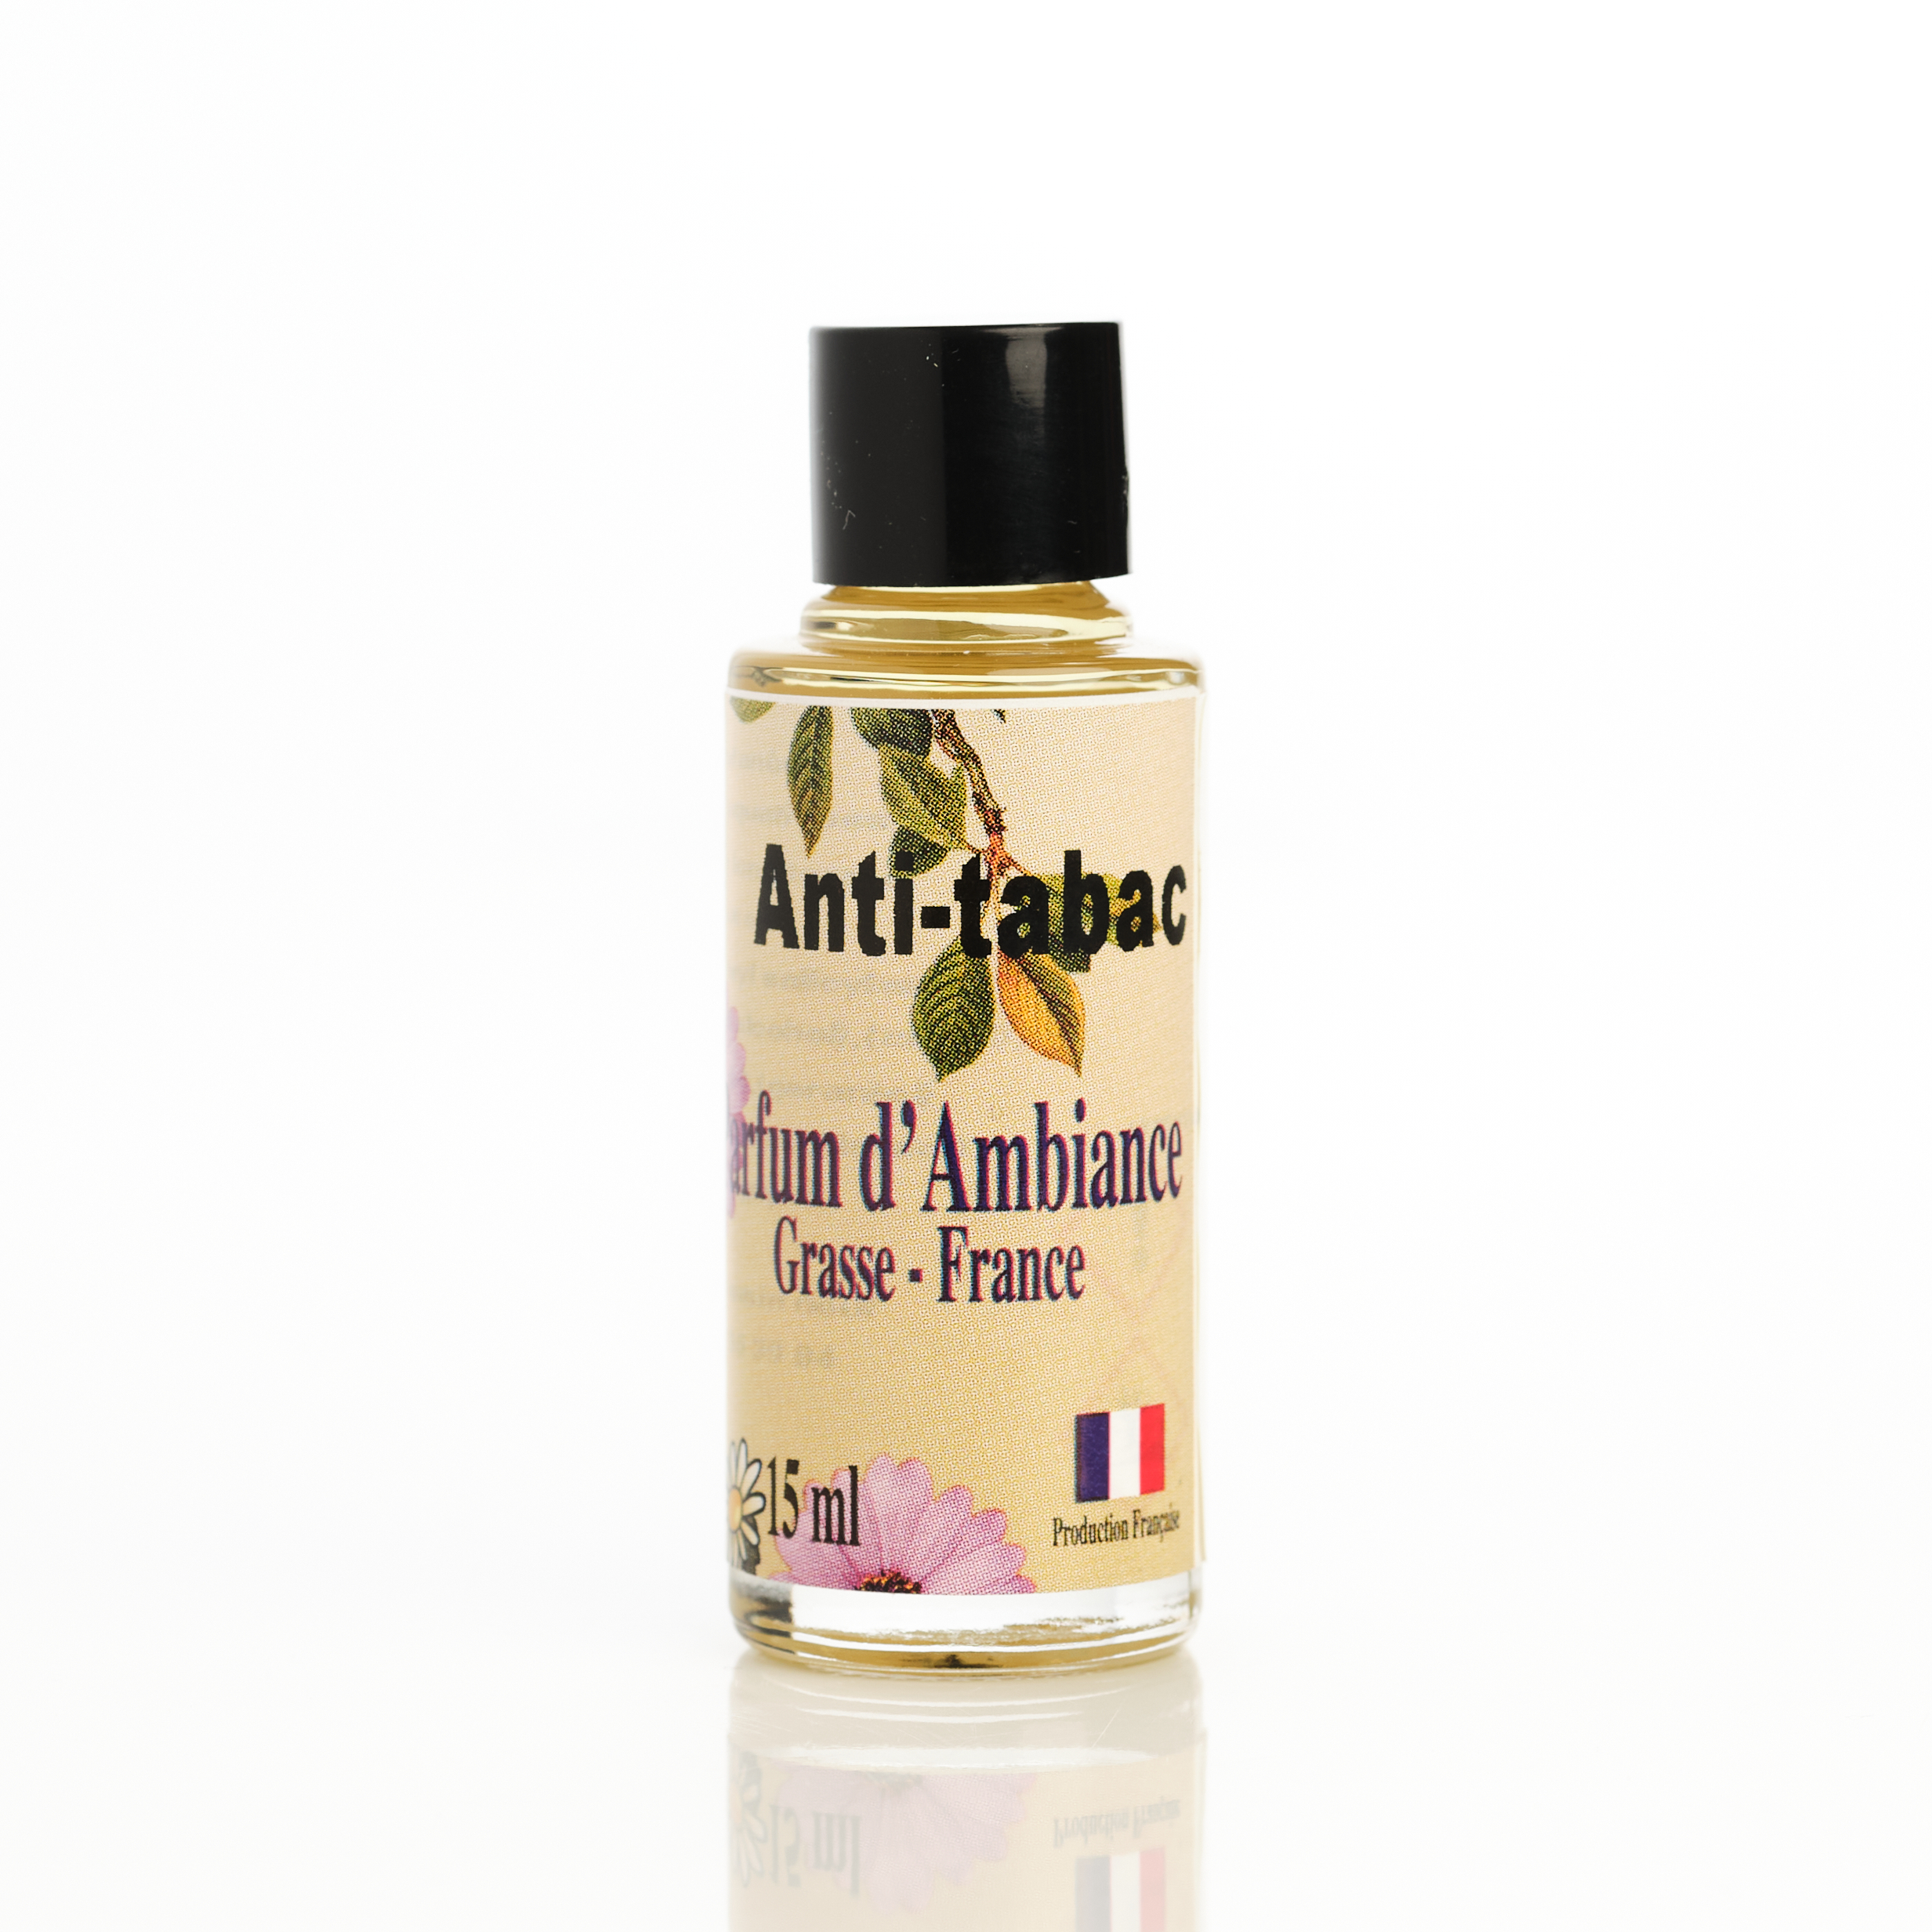 18 Bougies Chauffe-Plat Senteur Anti Tabac Parfum d'Ambiance